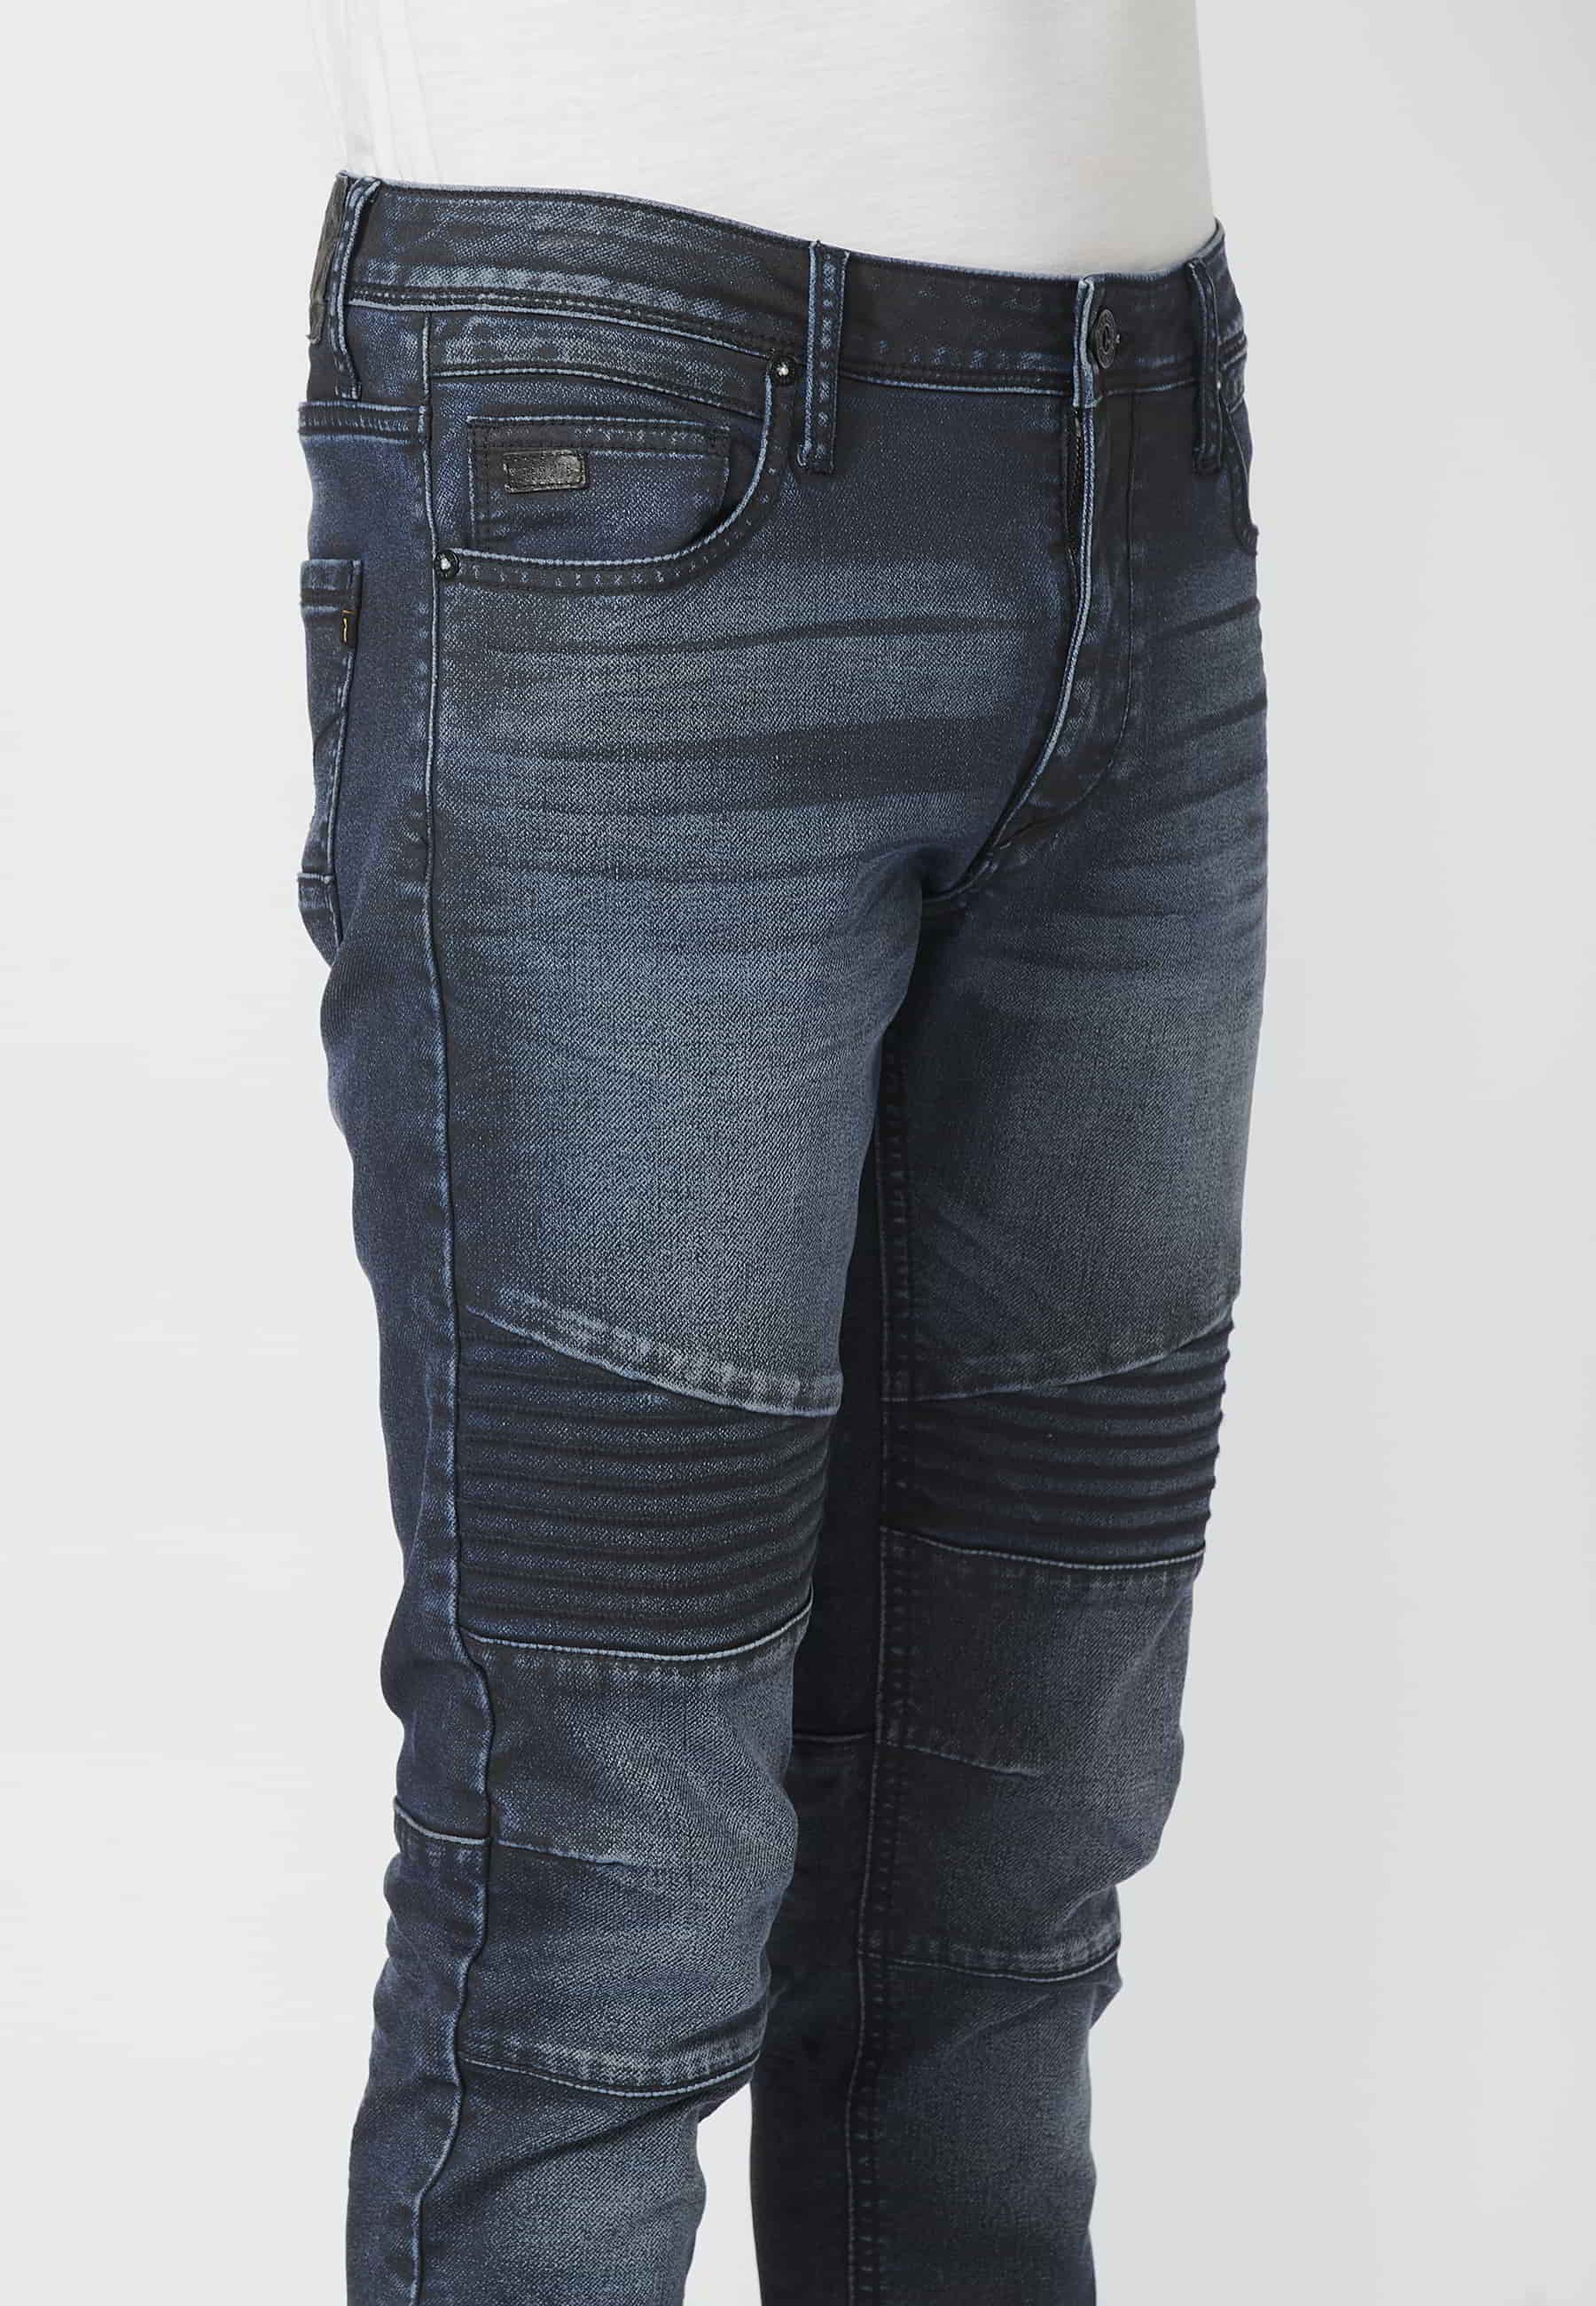 Pantalons llargs Jean skinny fit color blau fosc per a Home 4